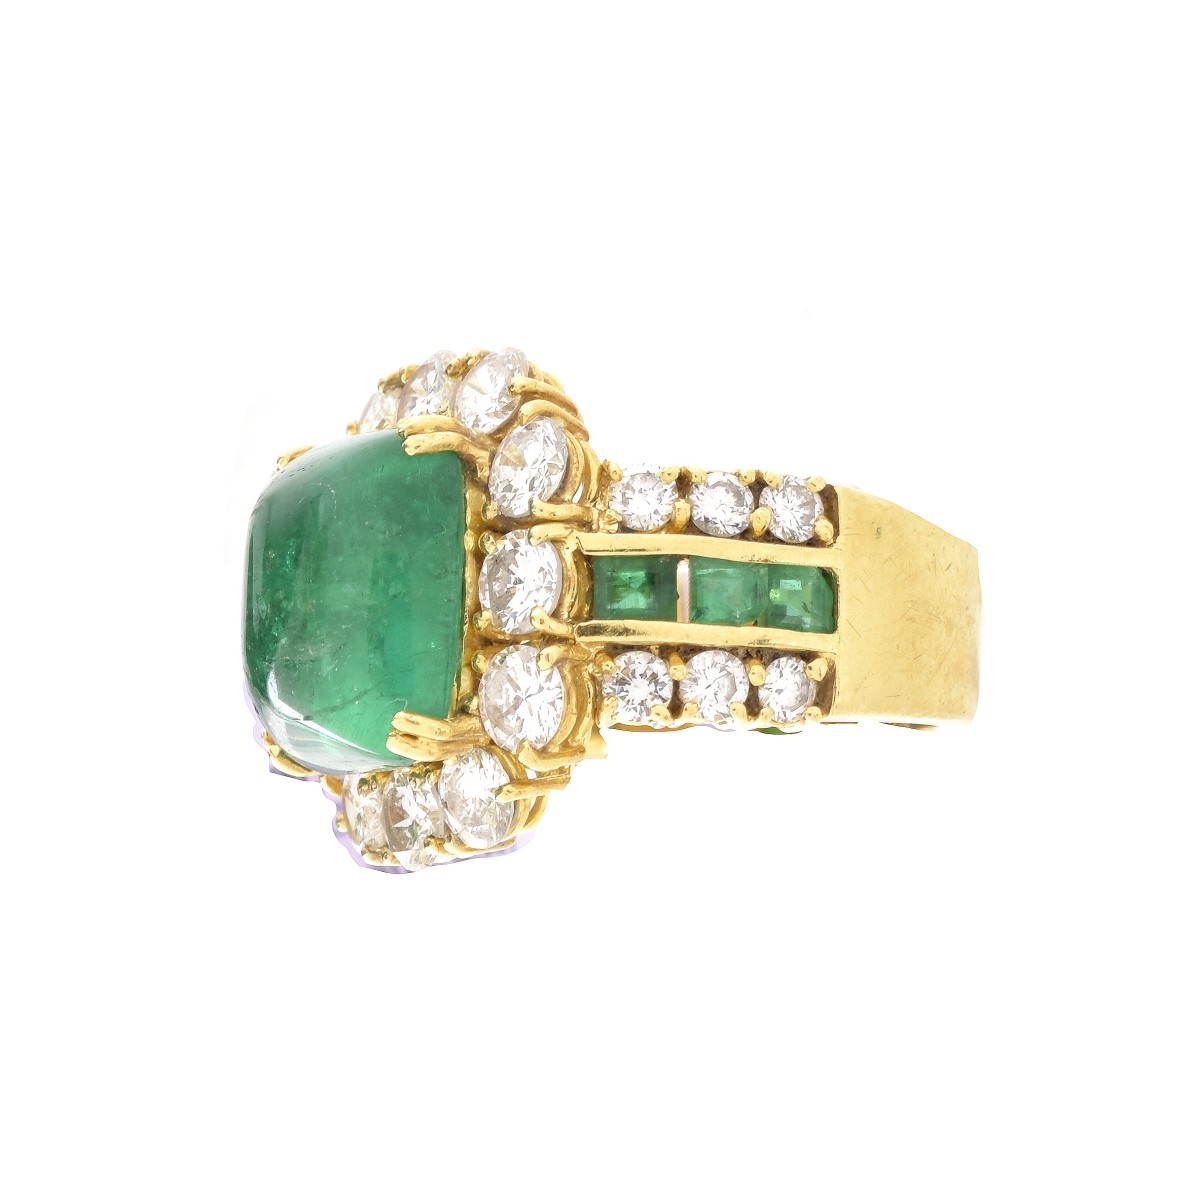 Sugarloaf Emerald, Diamond and 18K Ring